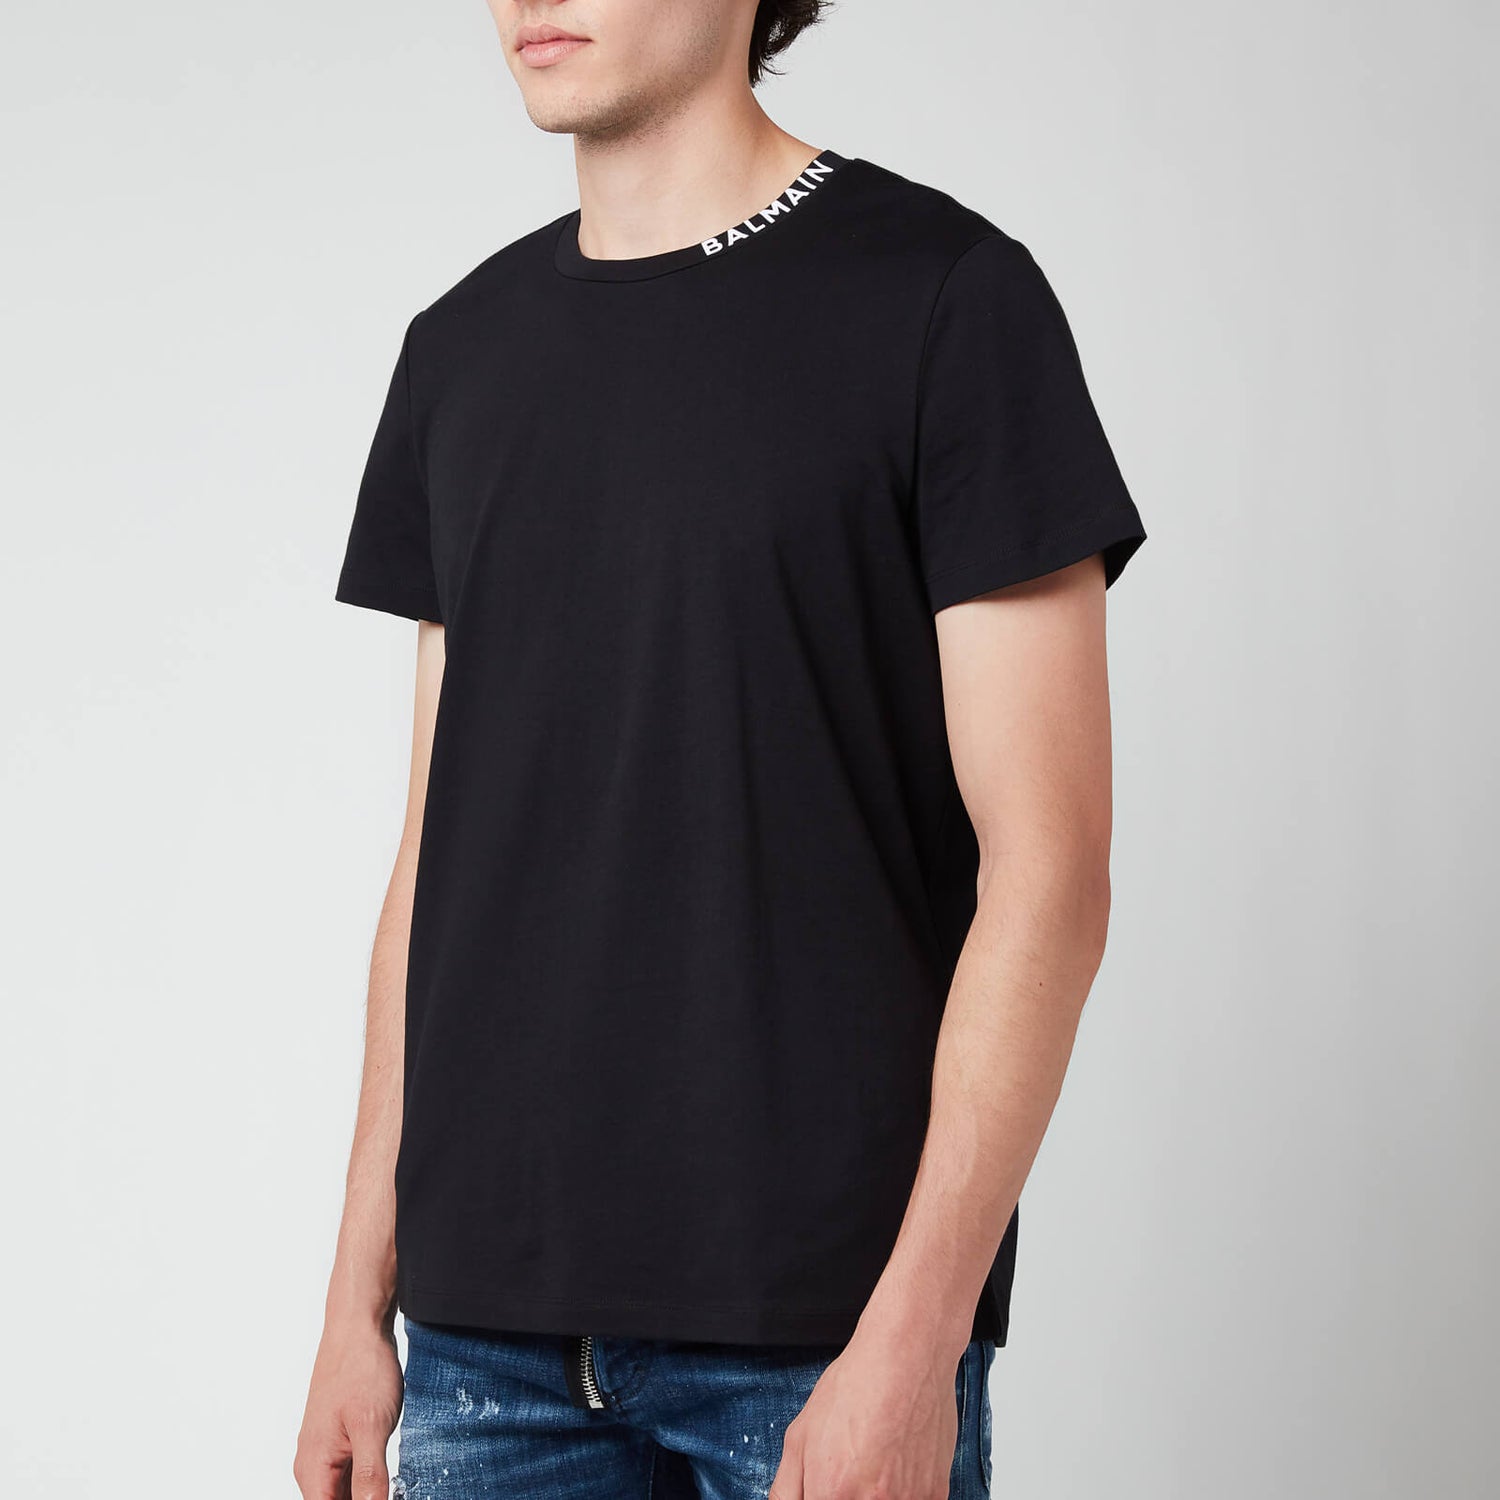 Balmain Men's Printed Collar T-Shirt - Black/White - S